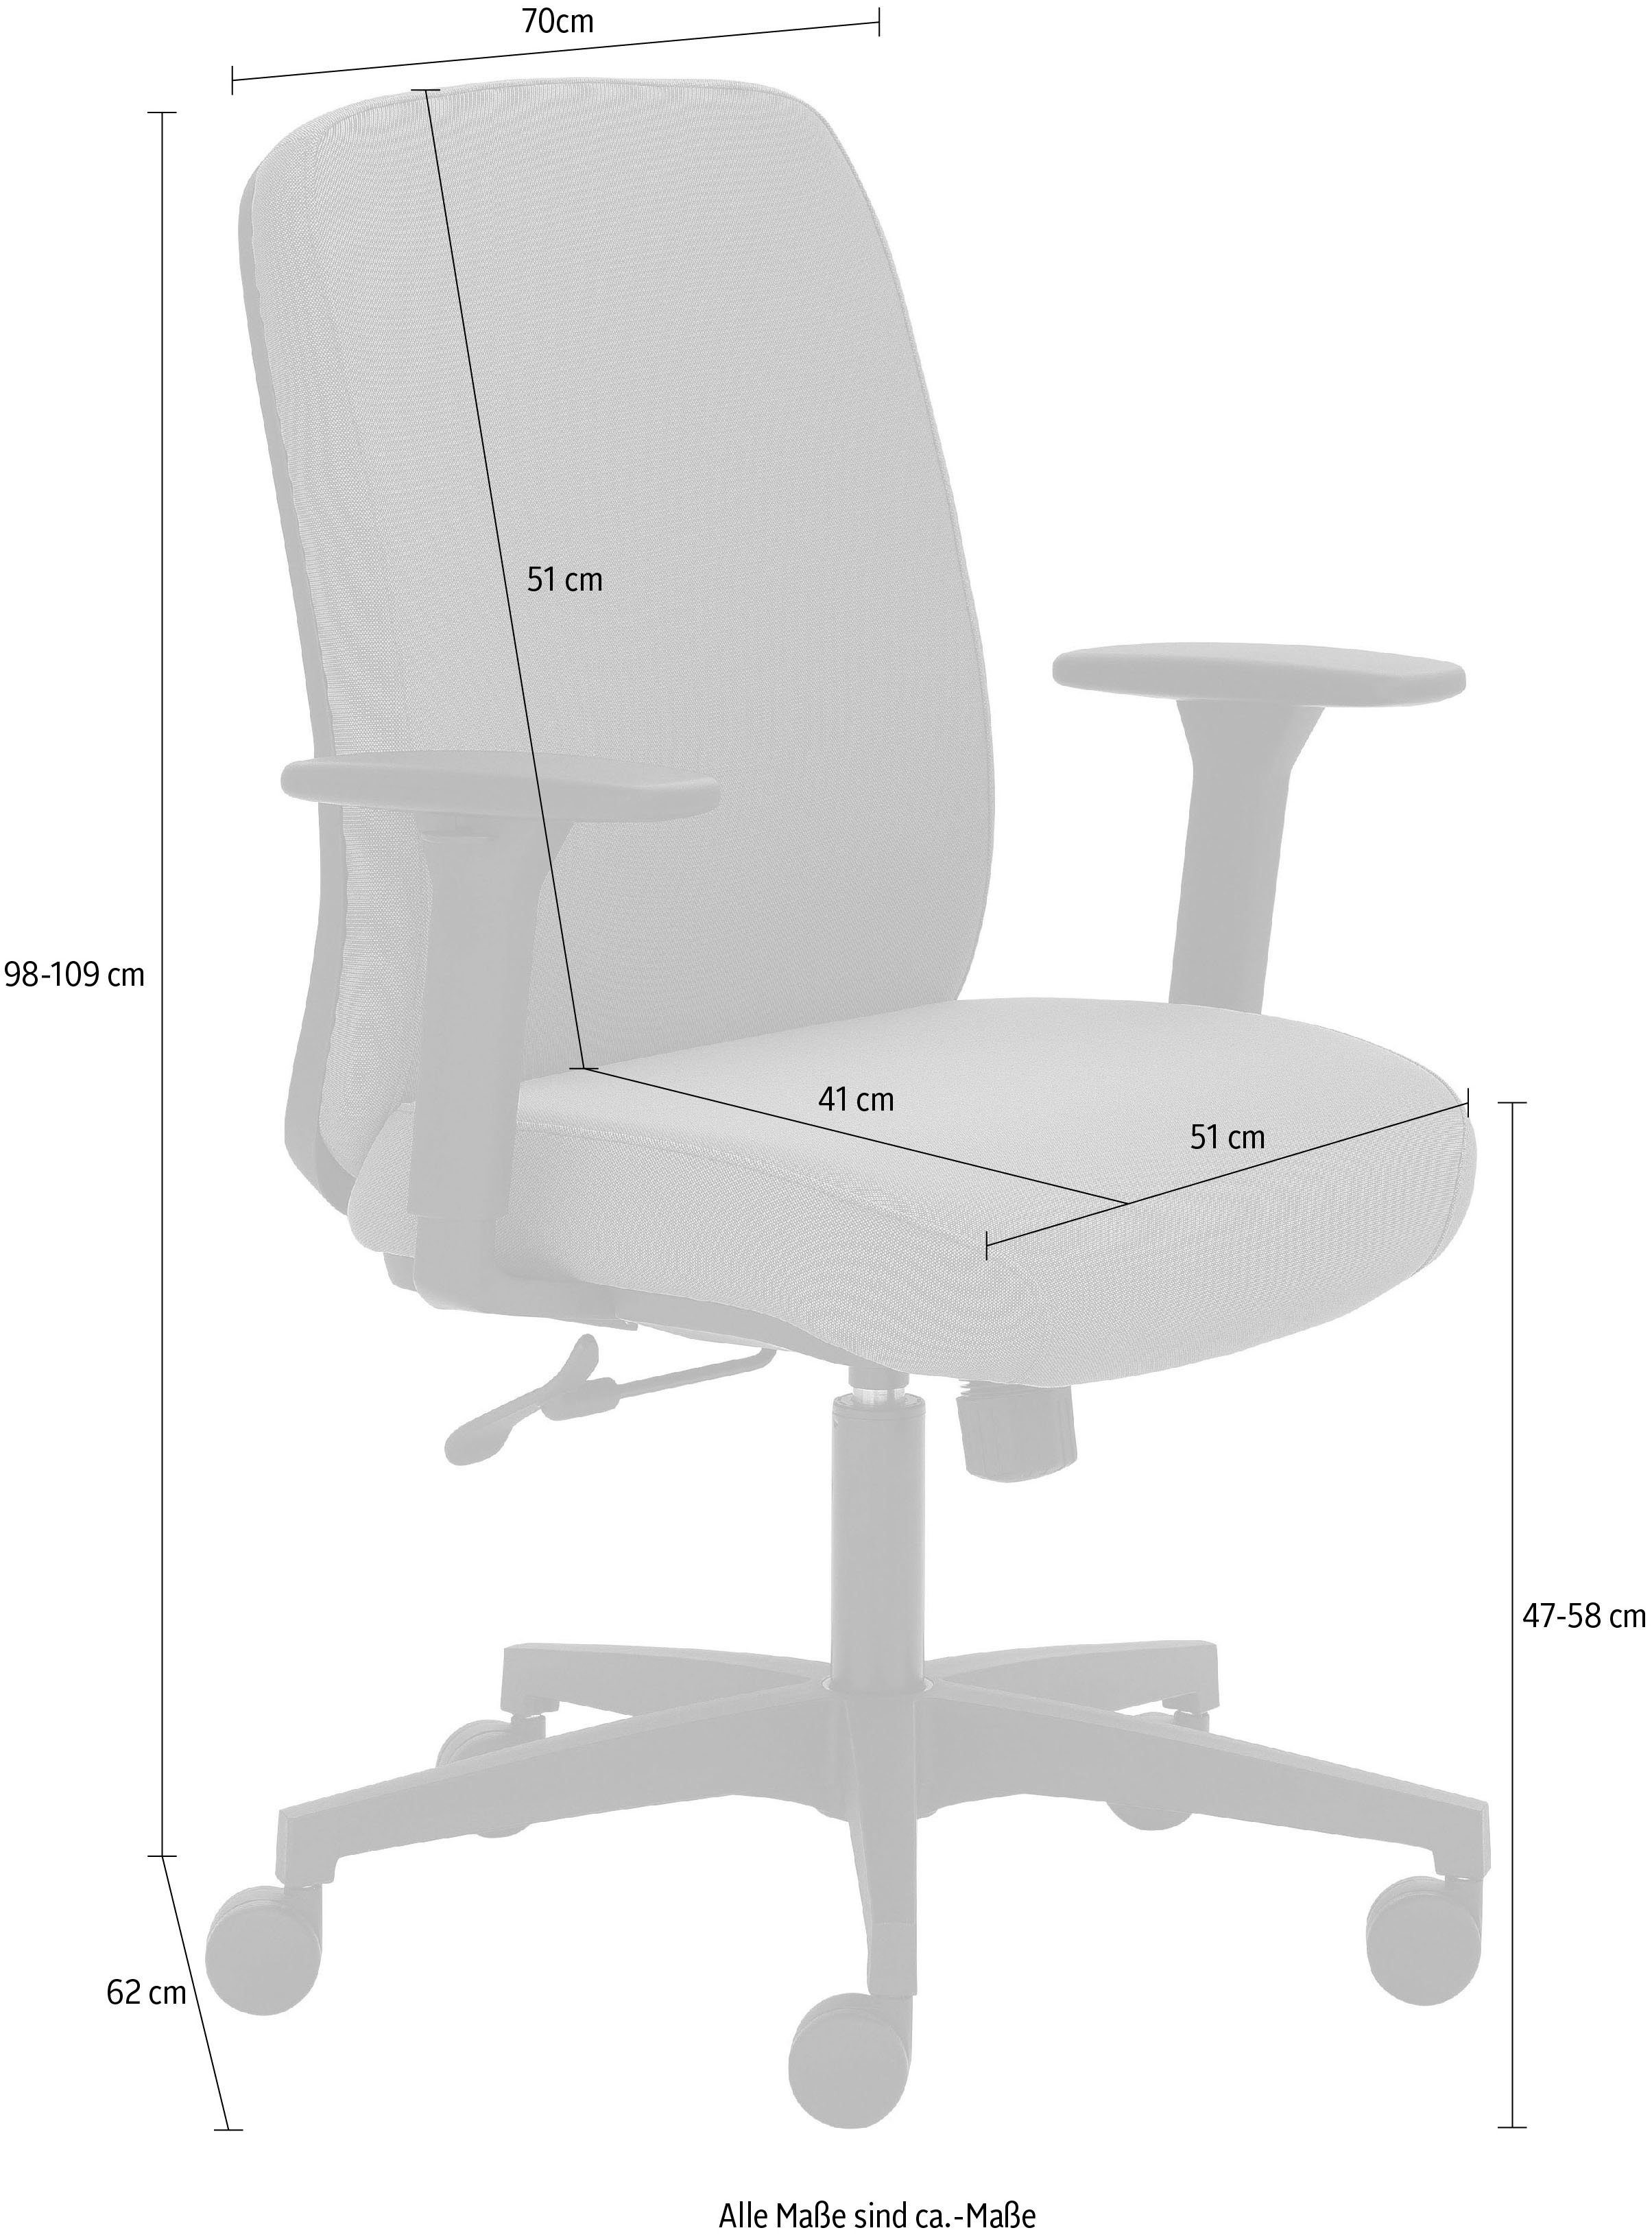 Mayer GS-zertifiziert, für Drehstuhl extra Sitzmöbel Kirschrot maximalen starke | Polsterung Kirschrot Sitzkomfort 2219,